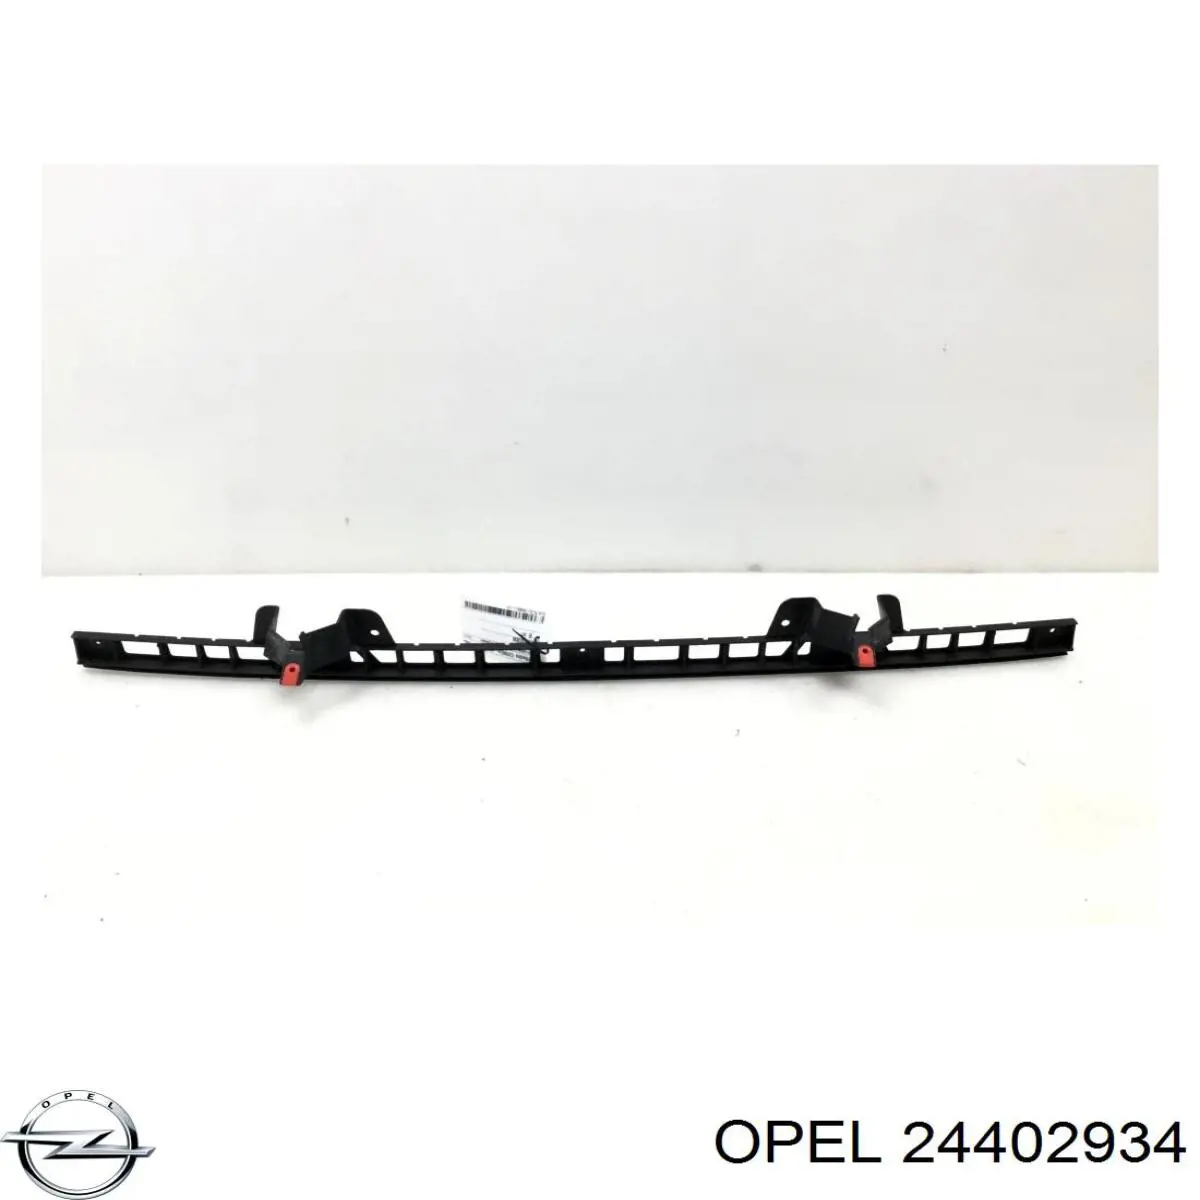 24402934 Opel soporte de parachoques trasero central